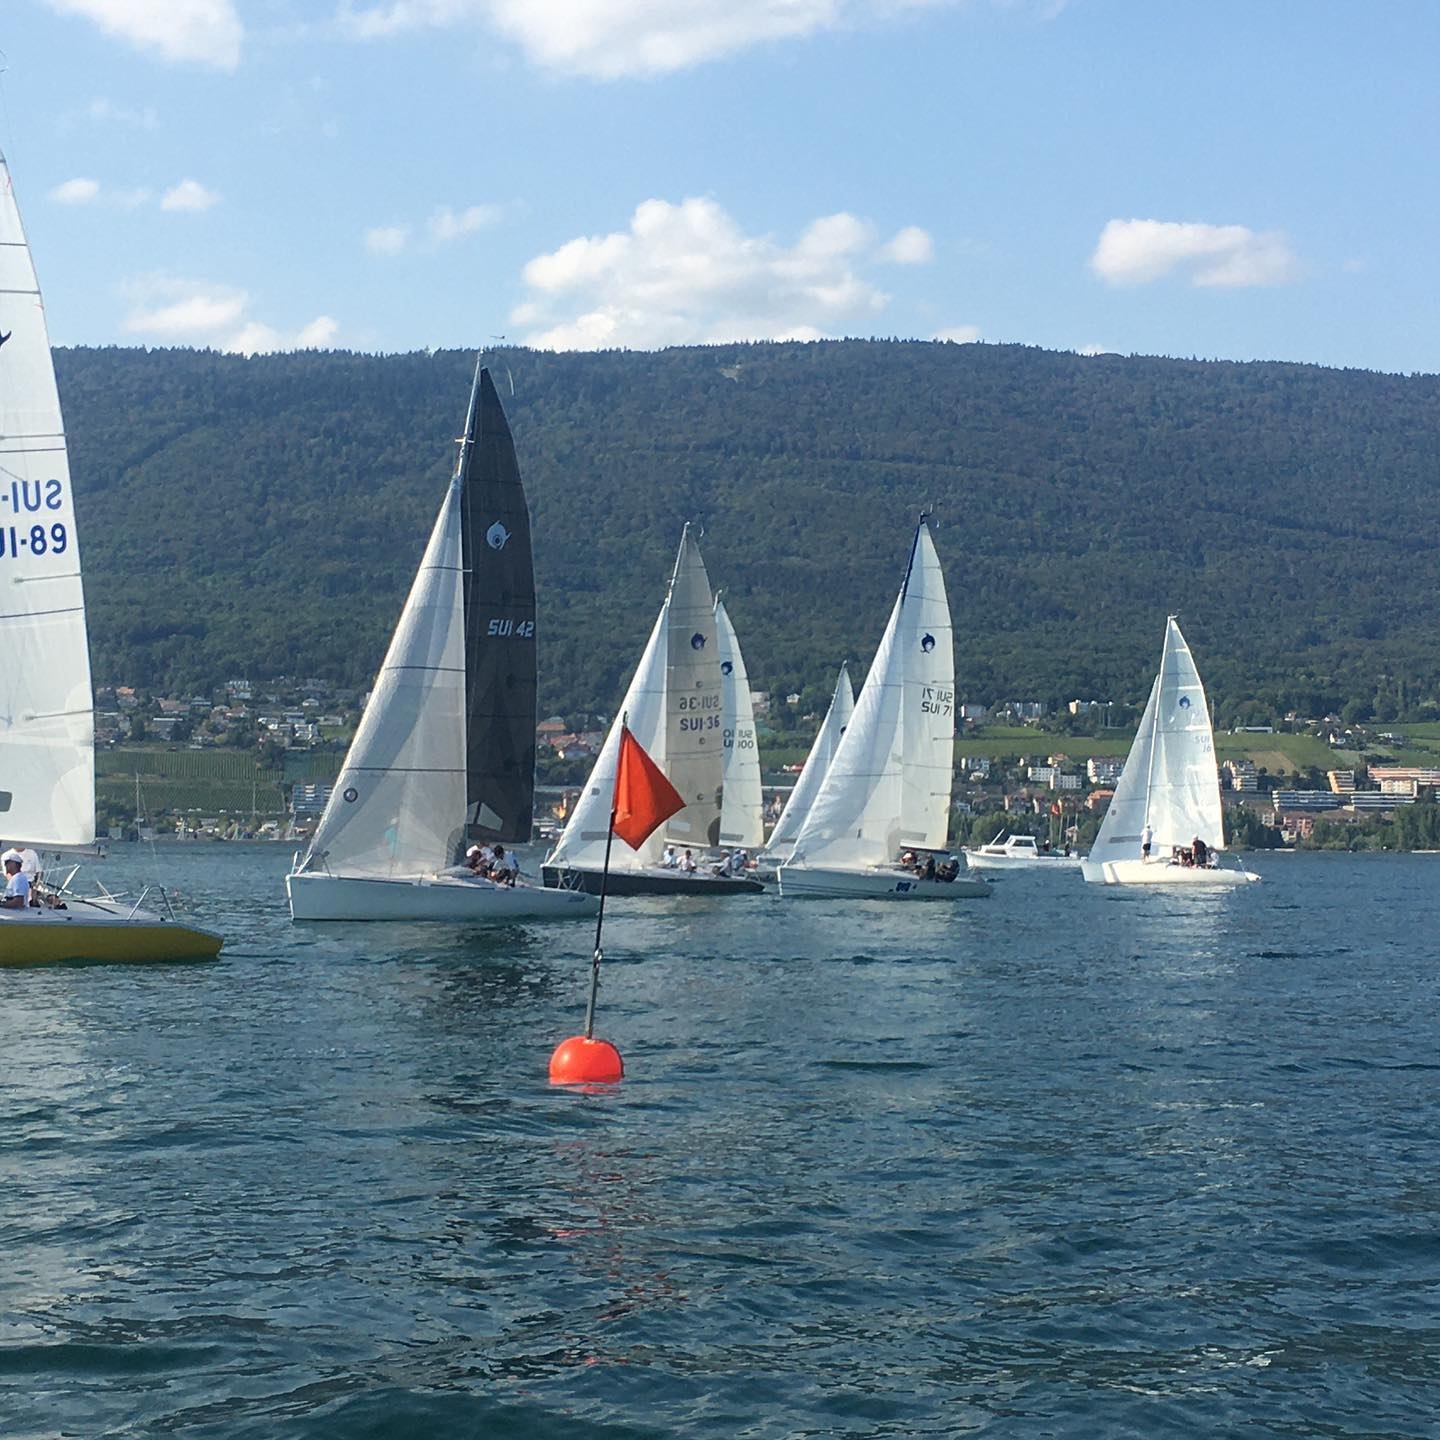  Dolphin 81  Swiss Championship 2020  CV Neuchatel  Final results